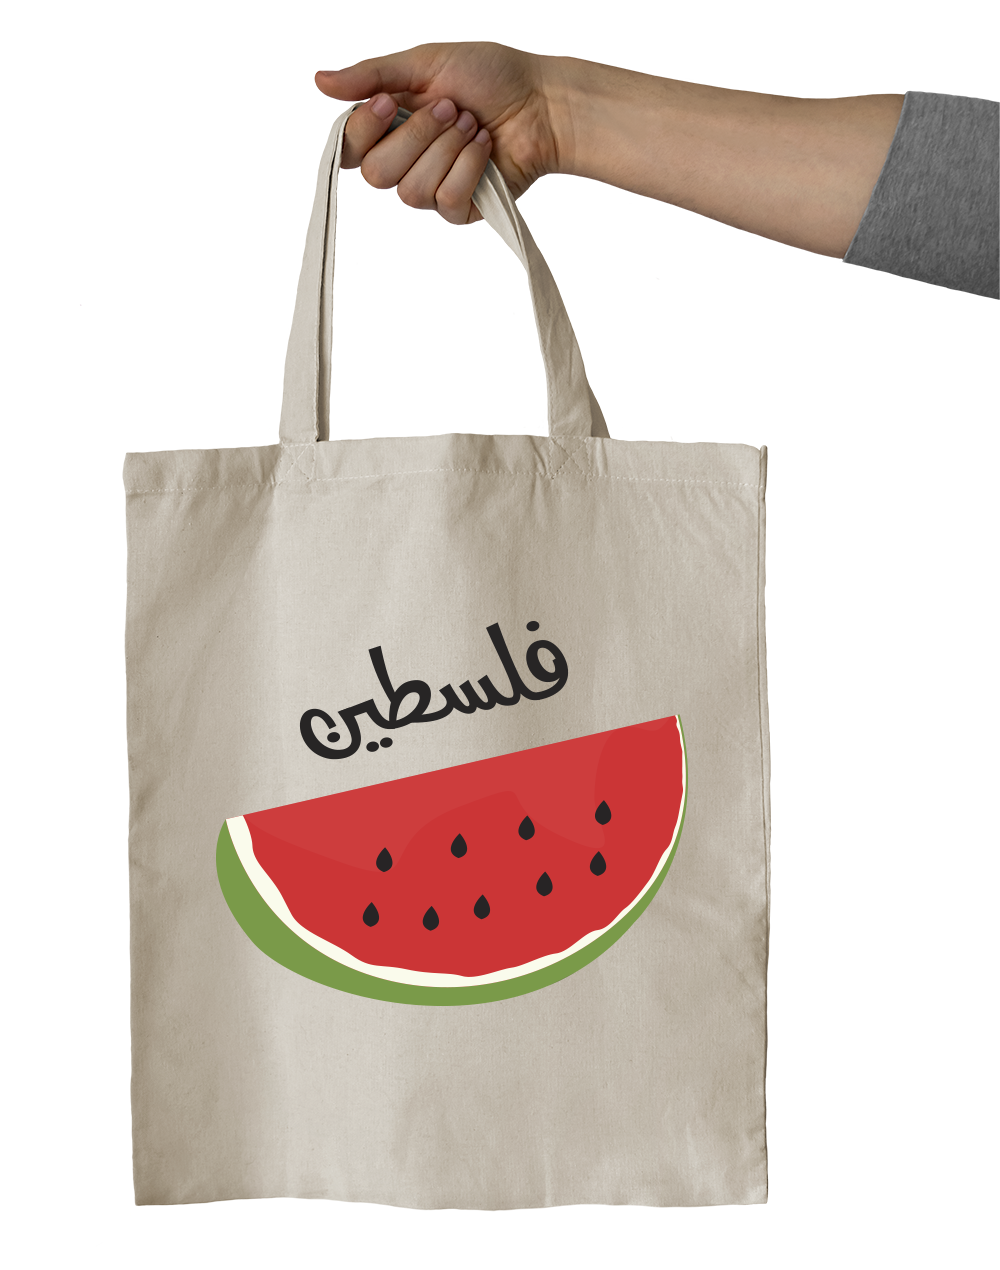 Palestinian Pride bag: Stylish and meaningful design celebrating heritage.